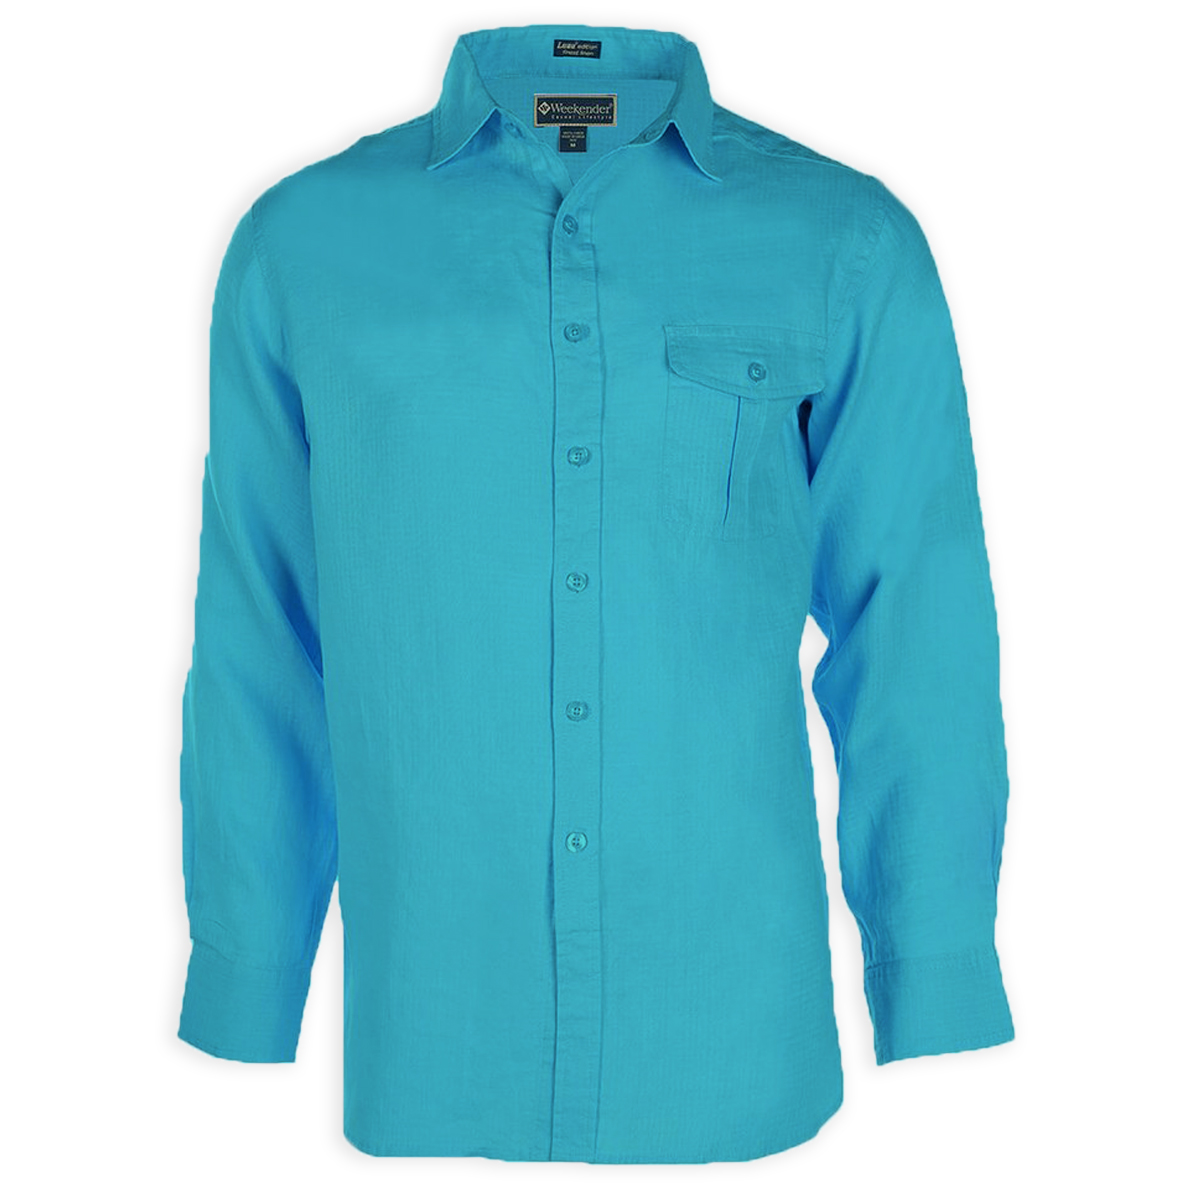 Weekender Men’s Long Sleeve Shirt-Cook Islands -Turquoise